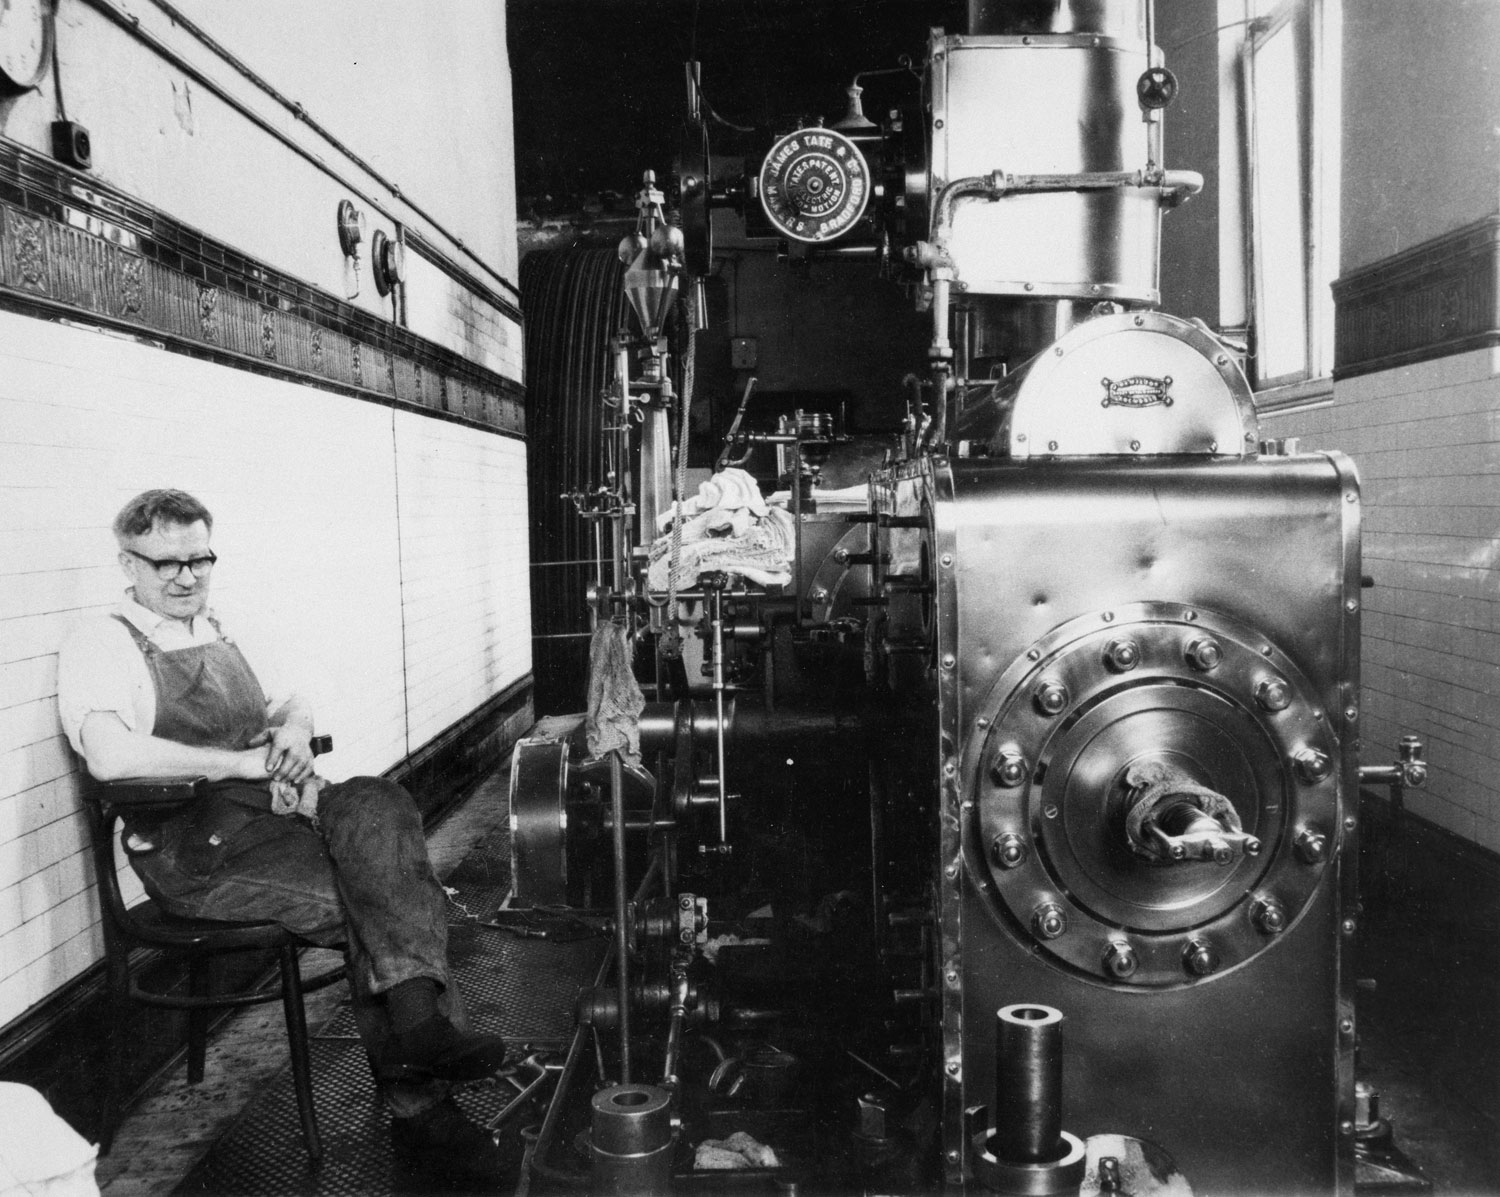 A man sat next to a steam engine